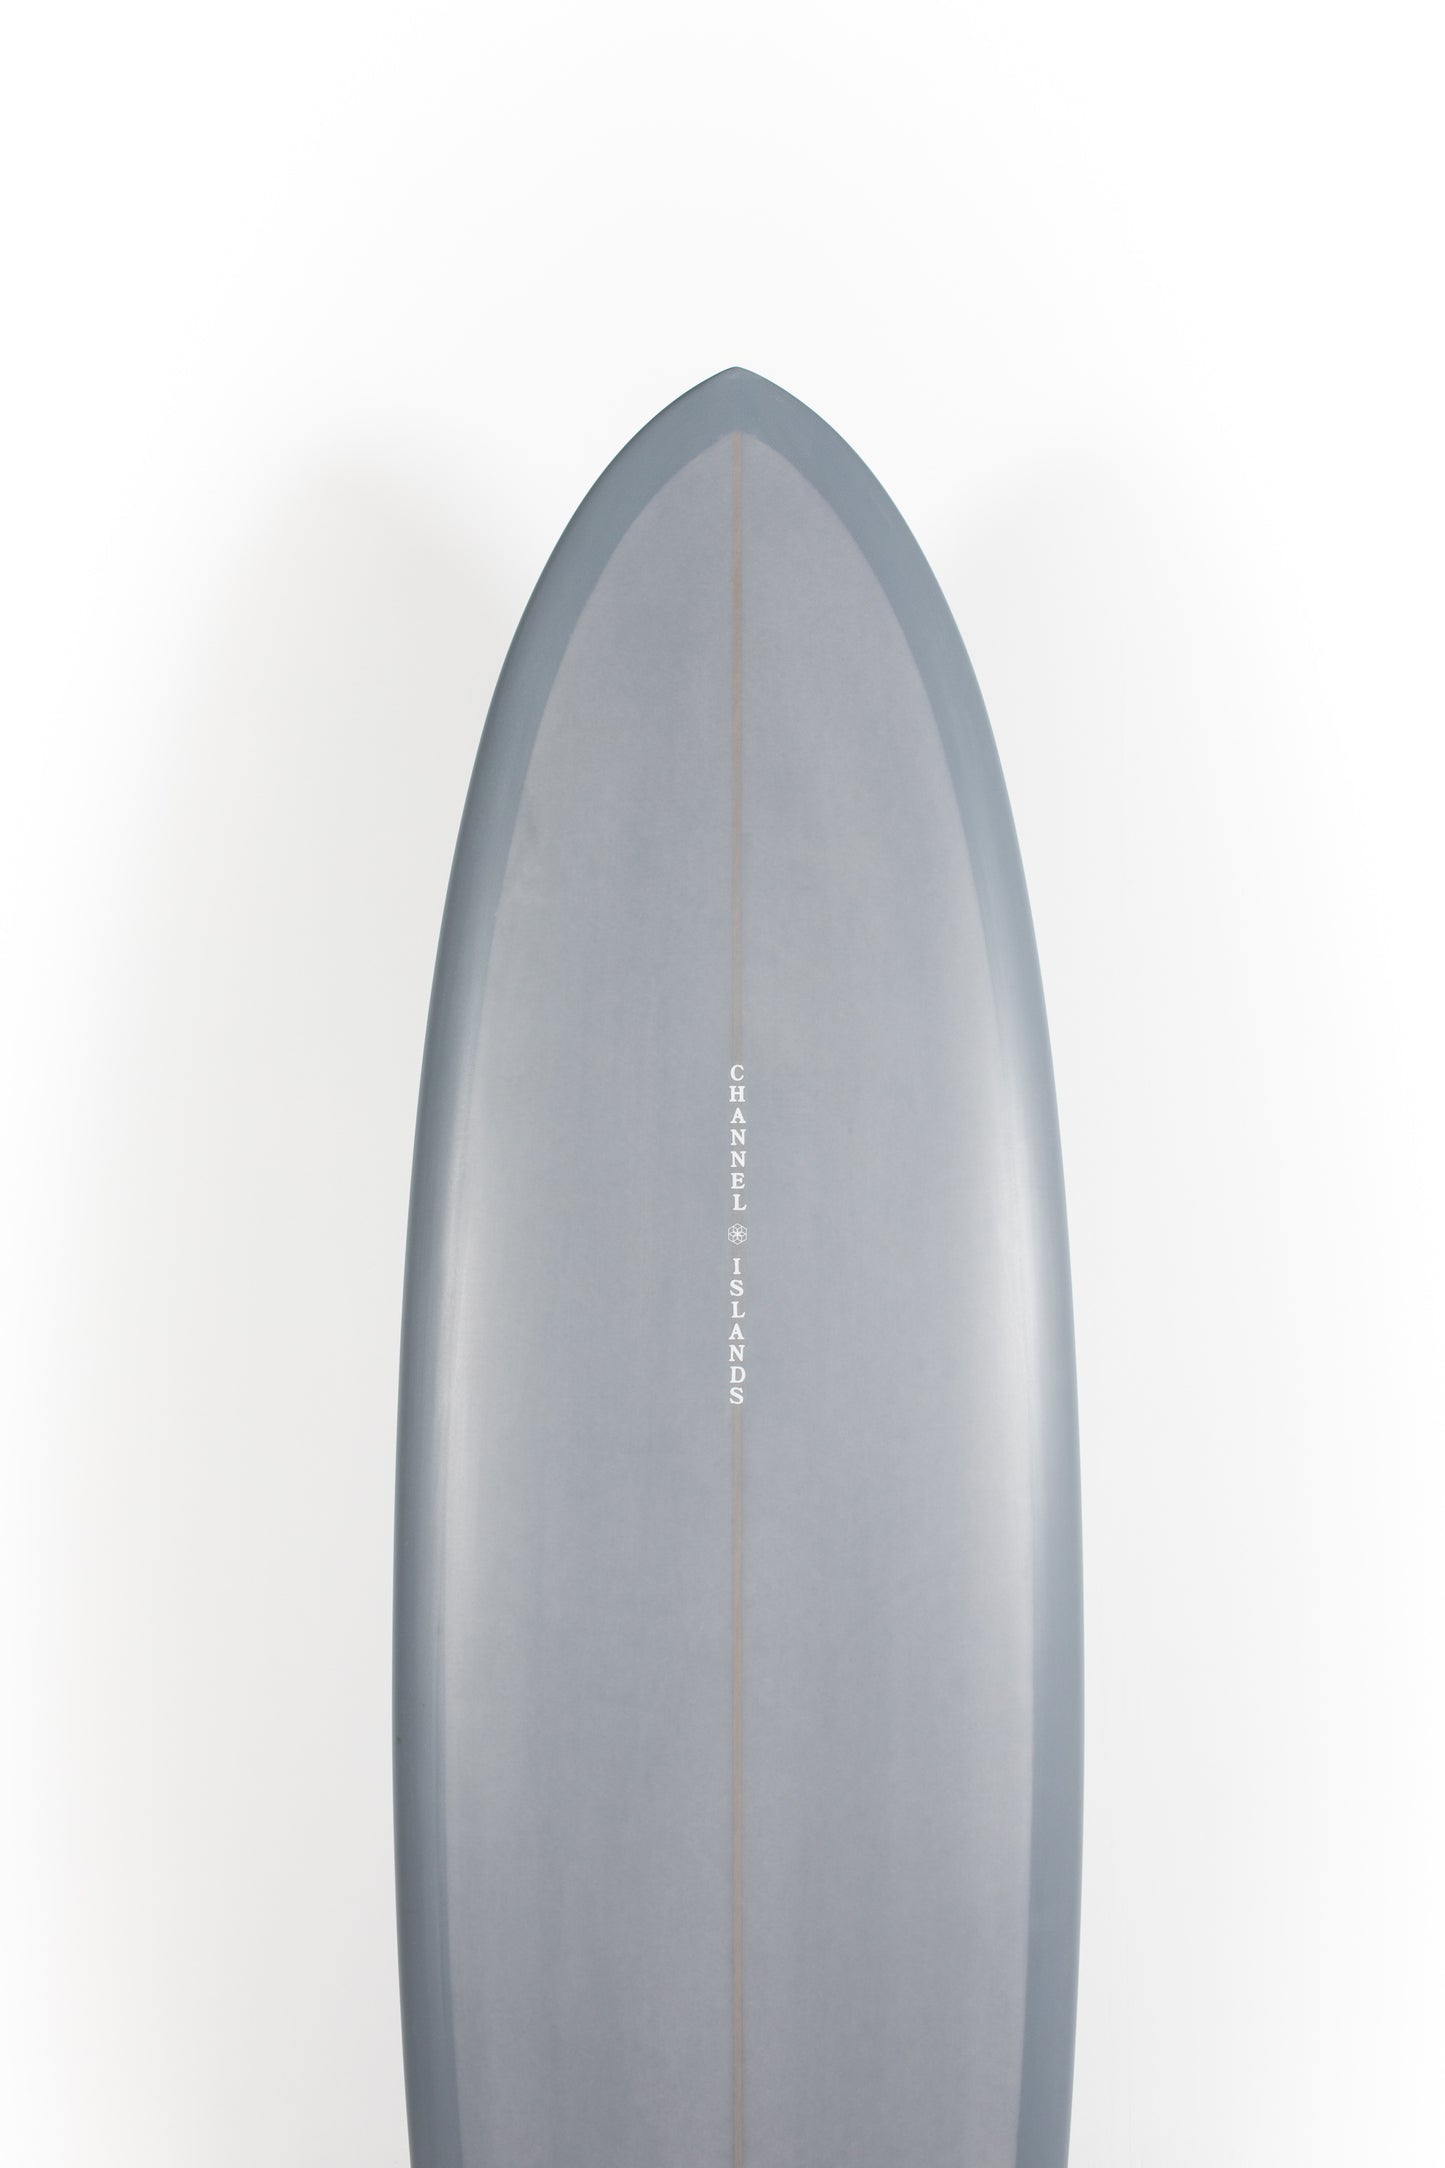 
                  
                    Pukas Surf Shop - Channel Islands - TRI PLANE HULL by Britt Merrick - 7'1" x 21 3/8 x 2 13/16 - 47,5L - CI24506
                  
                